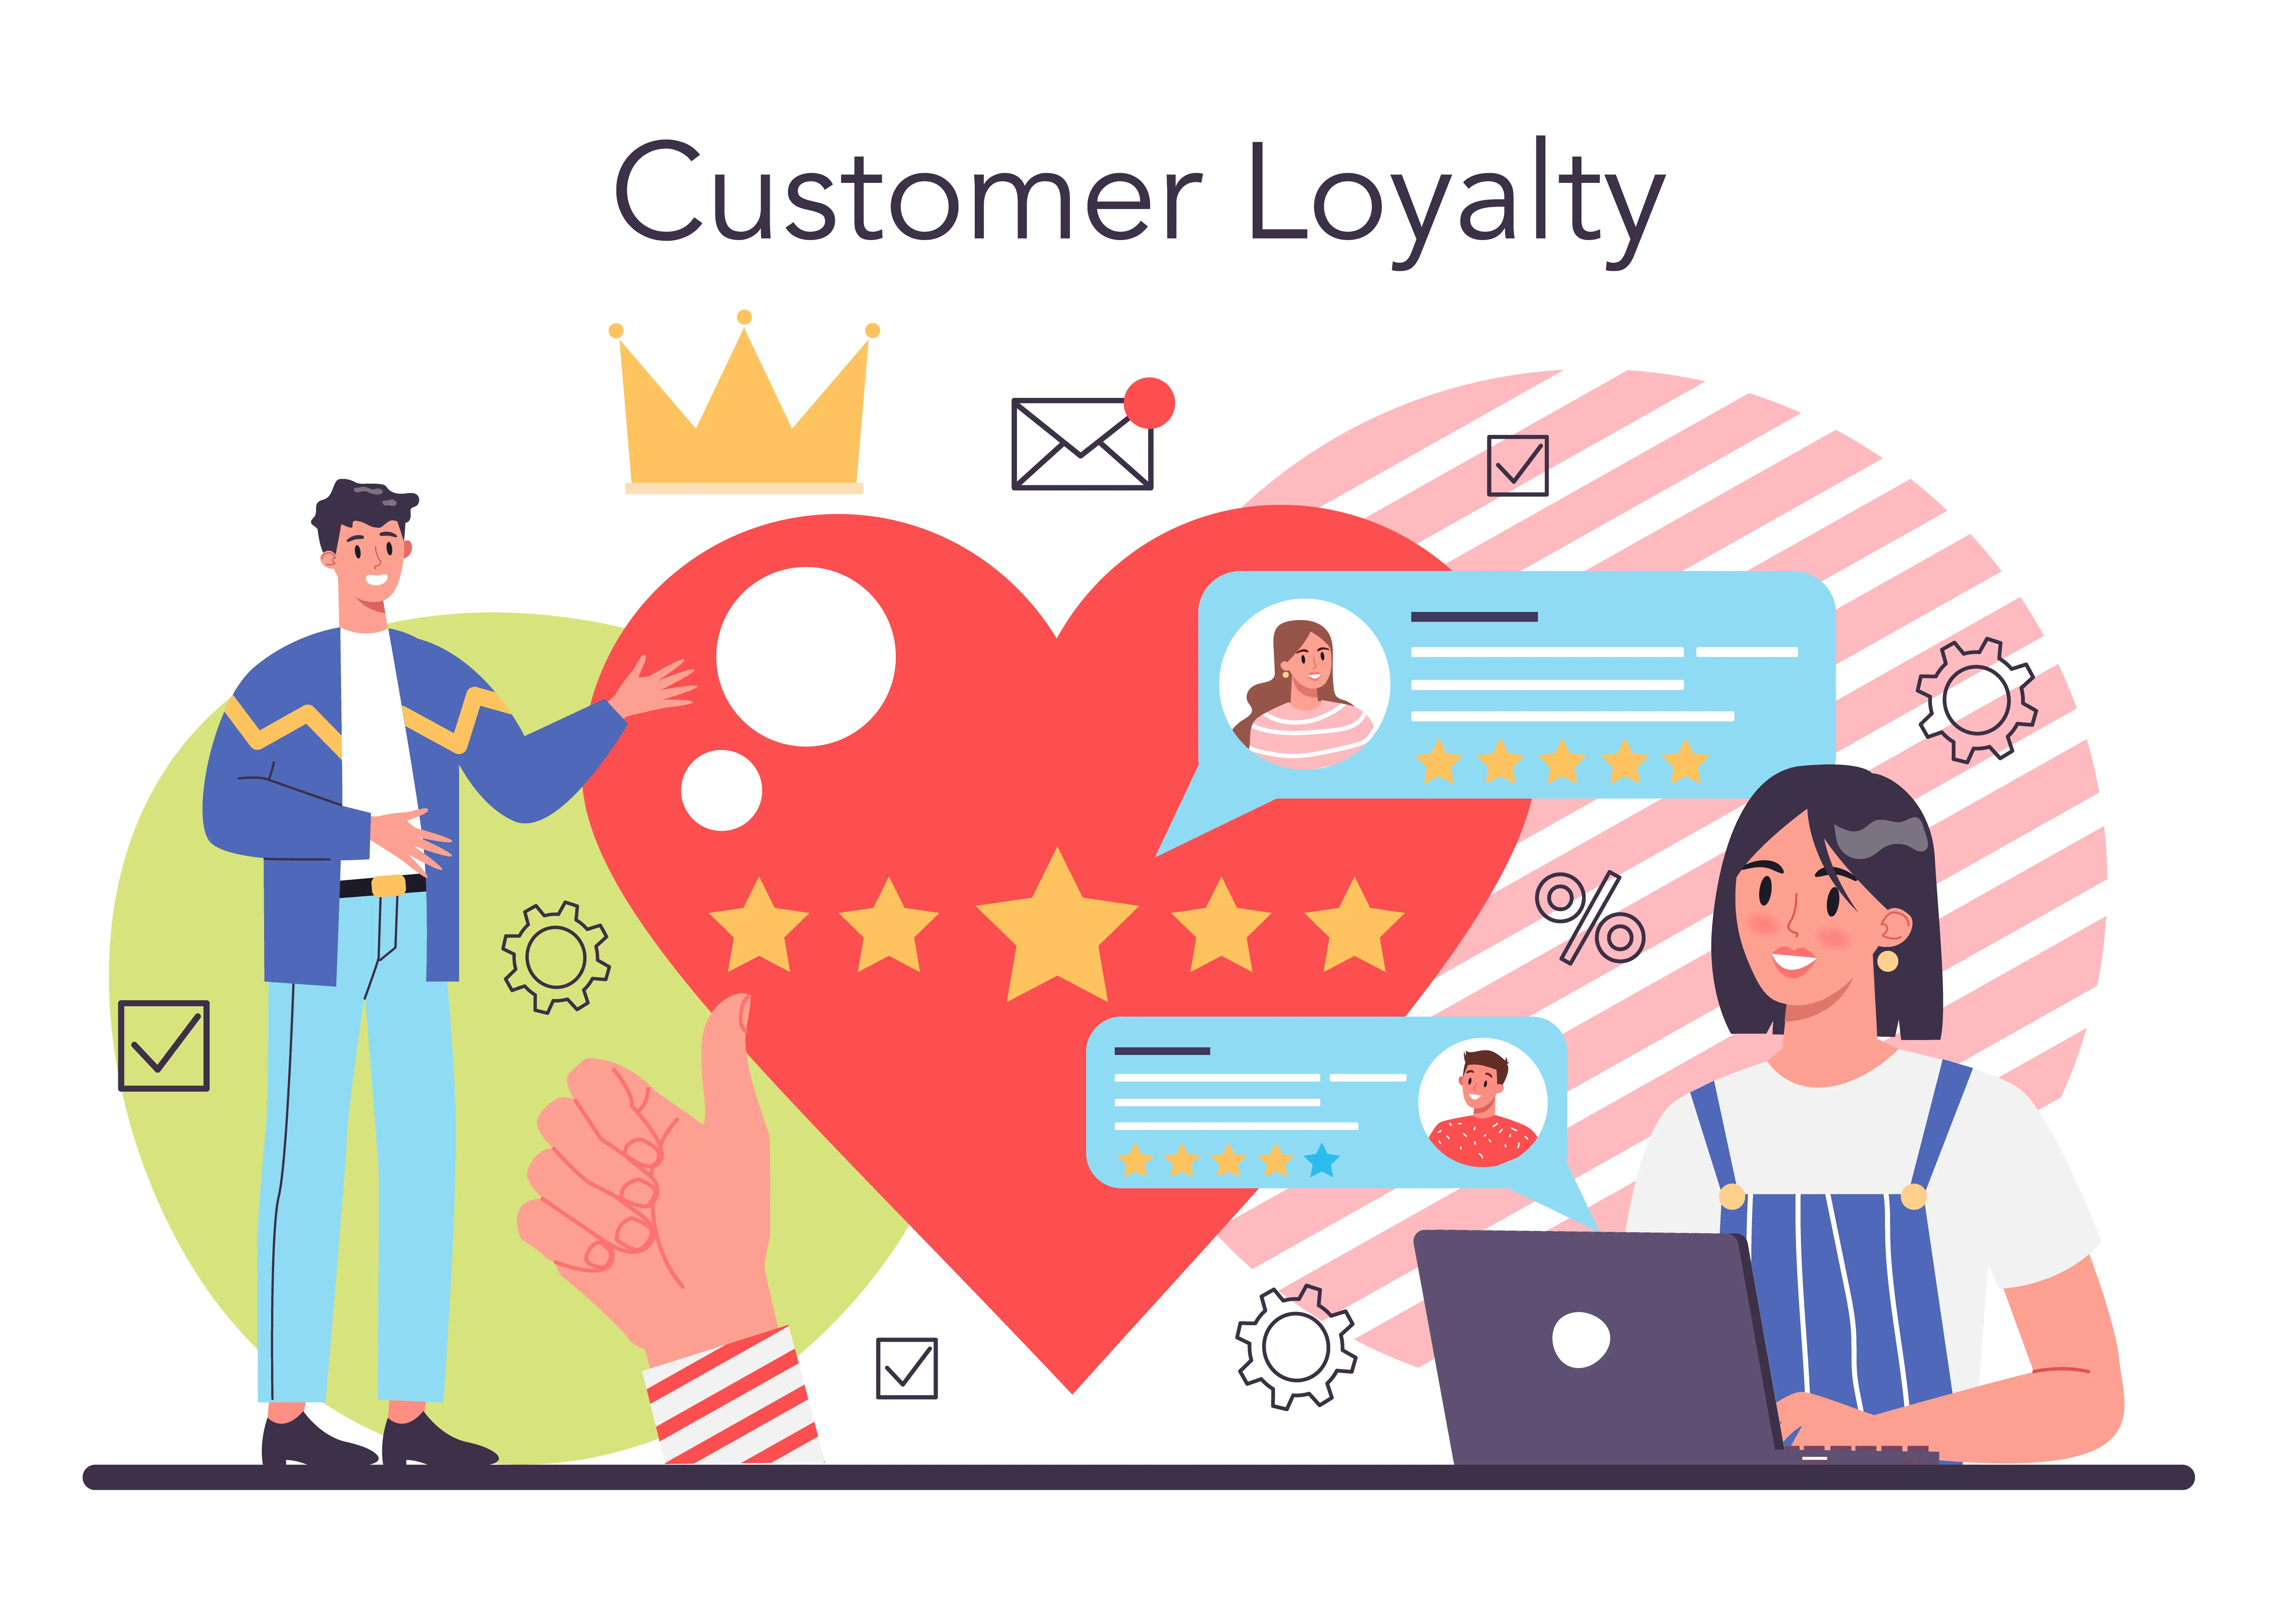 Developing Brand Loyalty Through Customer Service